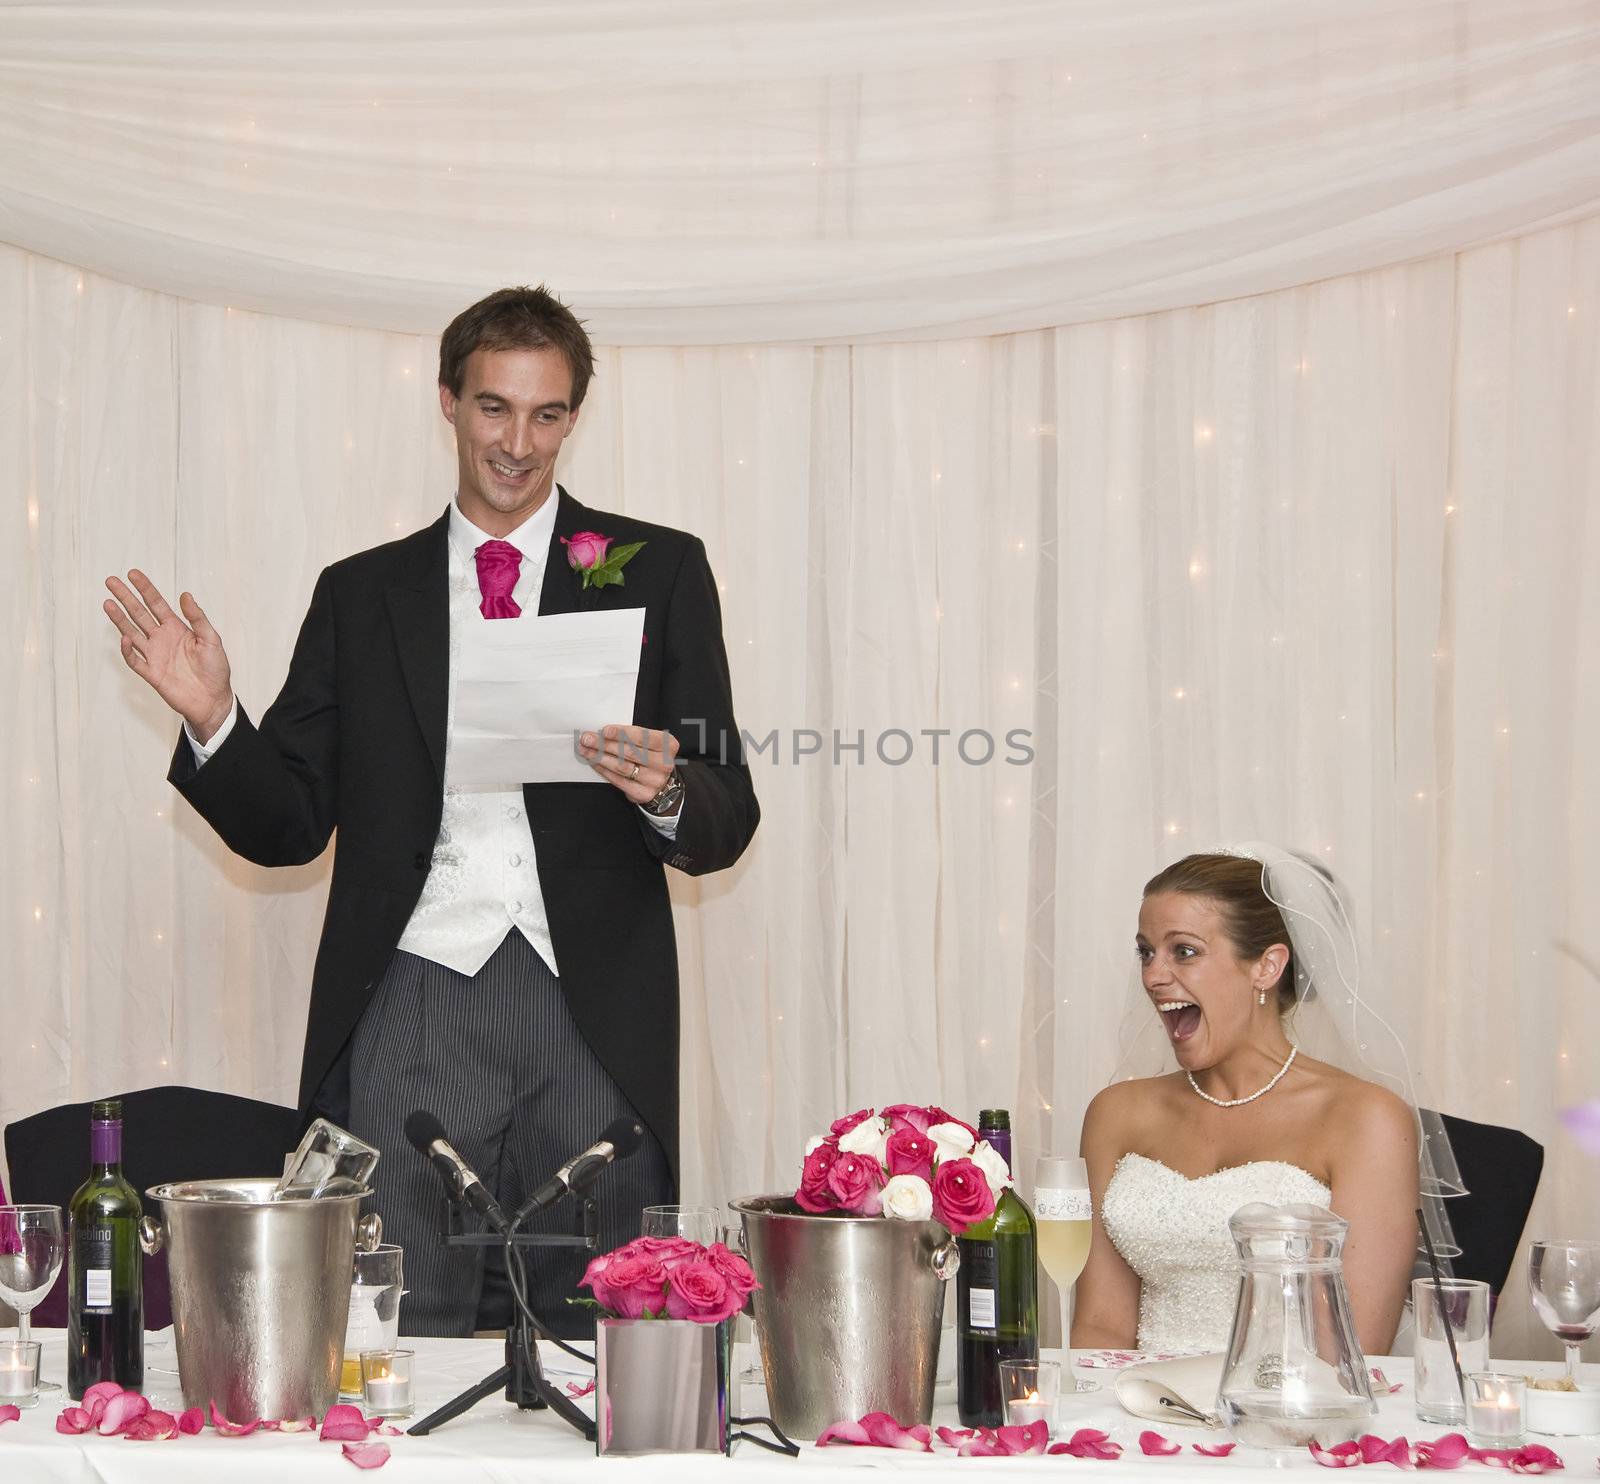 Bride's reaction to groom's speech on wedding day by Veneratio